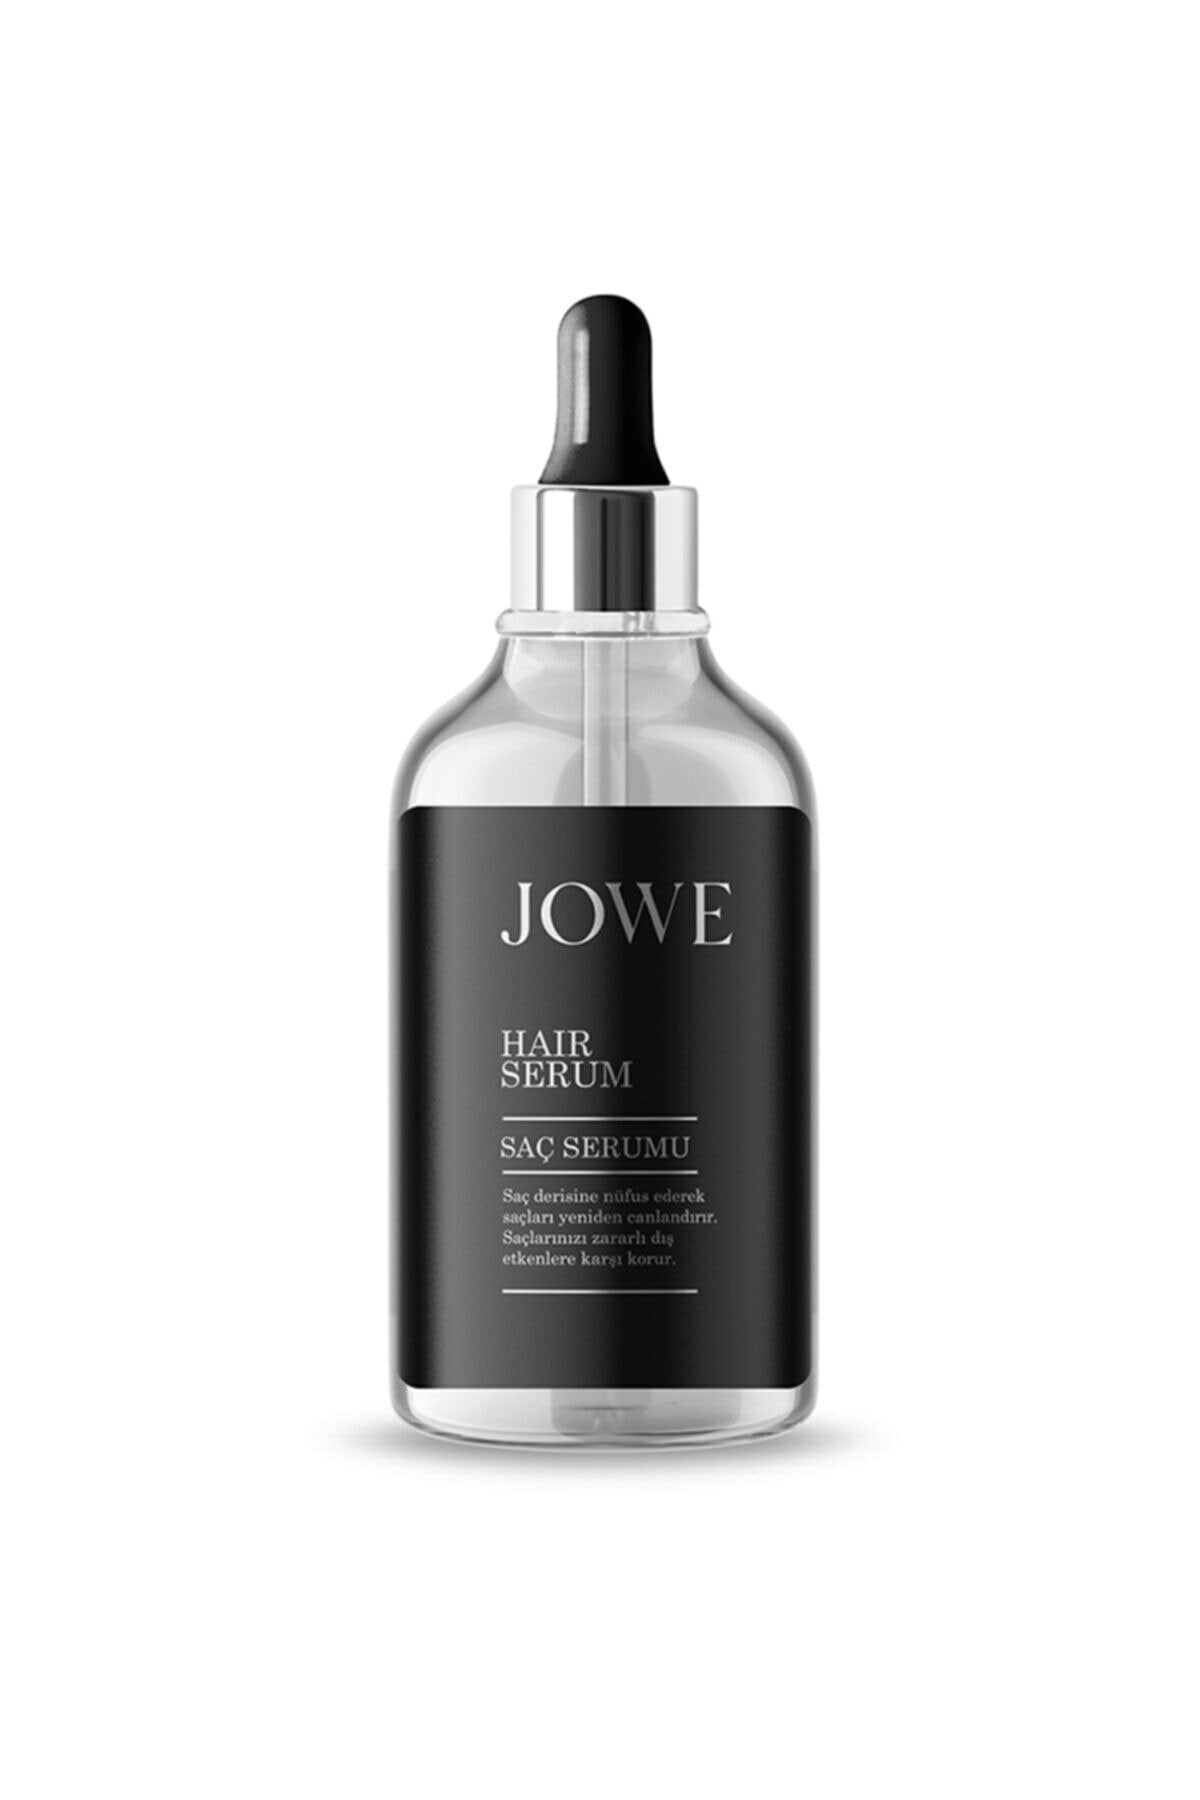 JOWE - Hair Serum